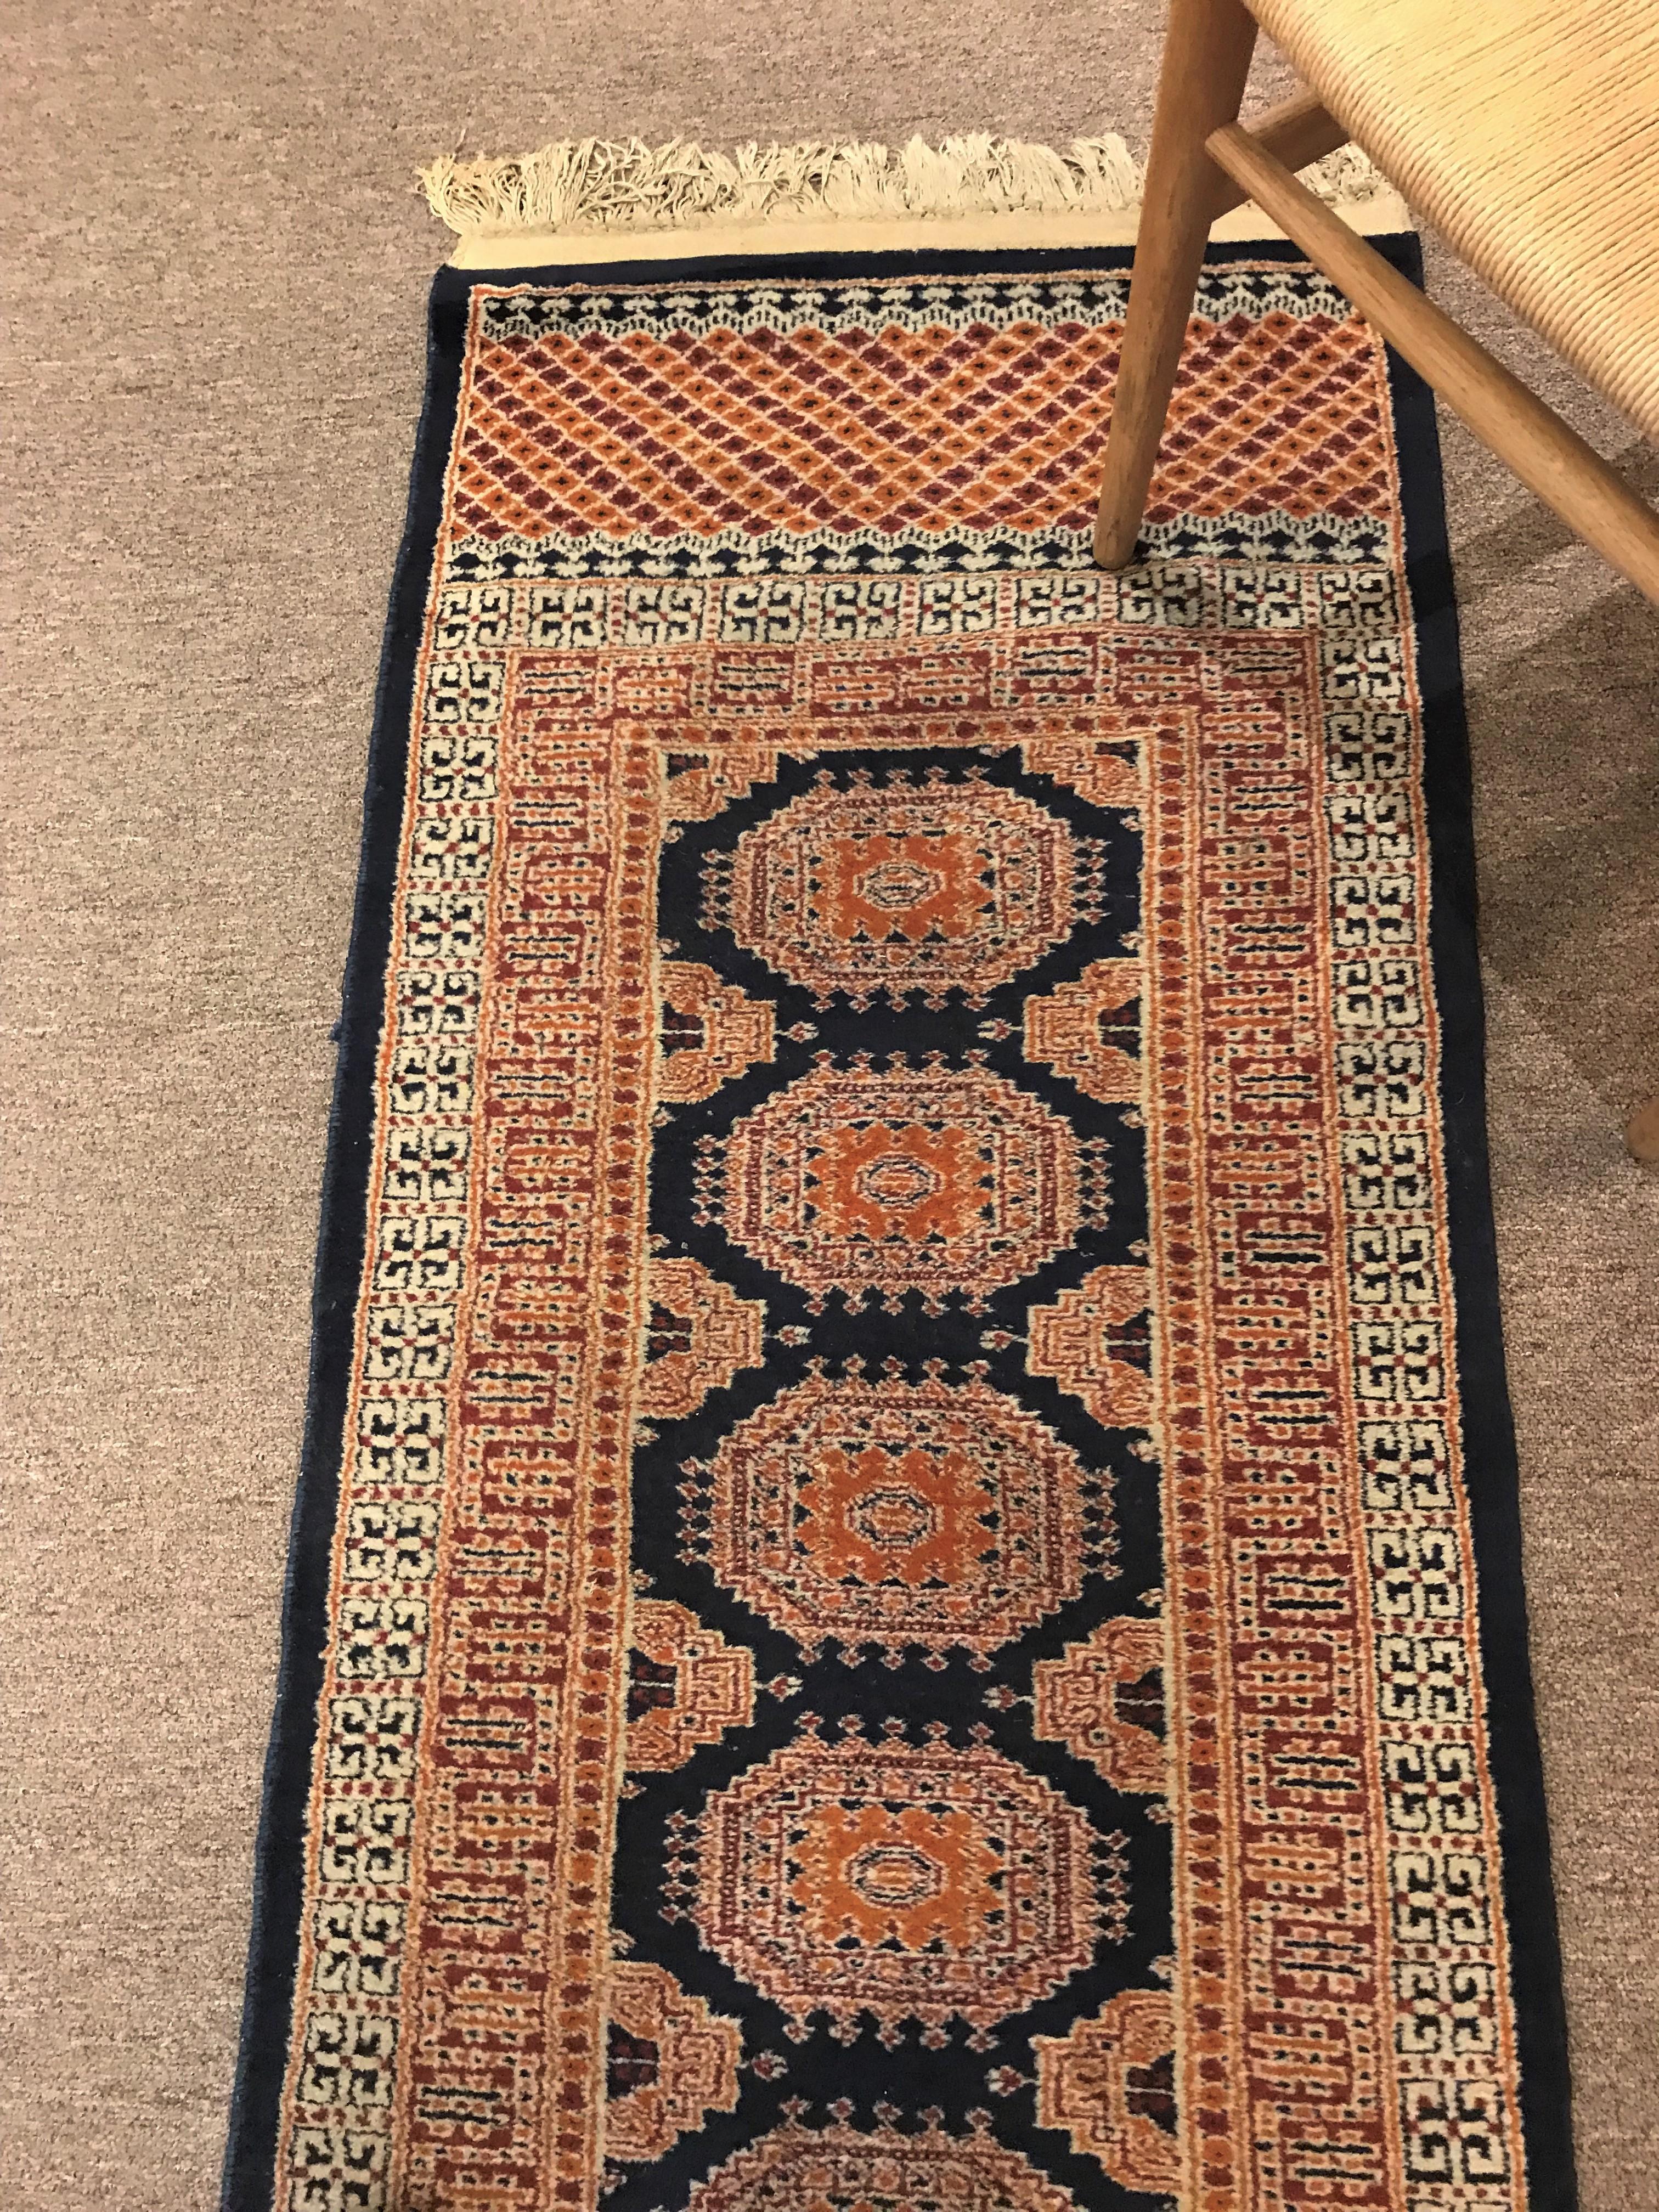 Kazak Fine Pakistani Bokhara Semi-Antique 10+ feet Hand-Knotted Carpet Runner 1970s